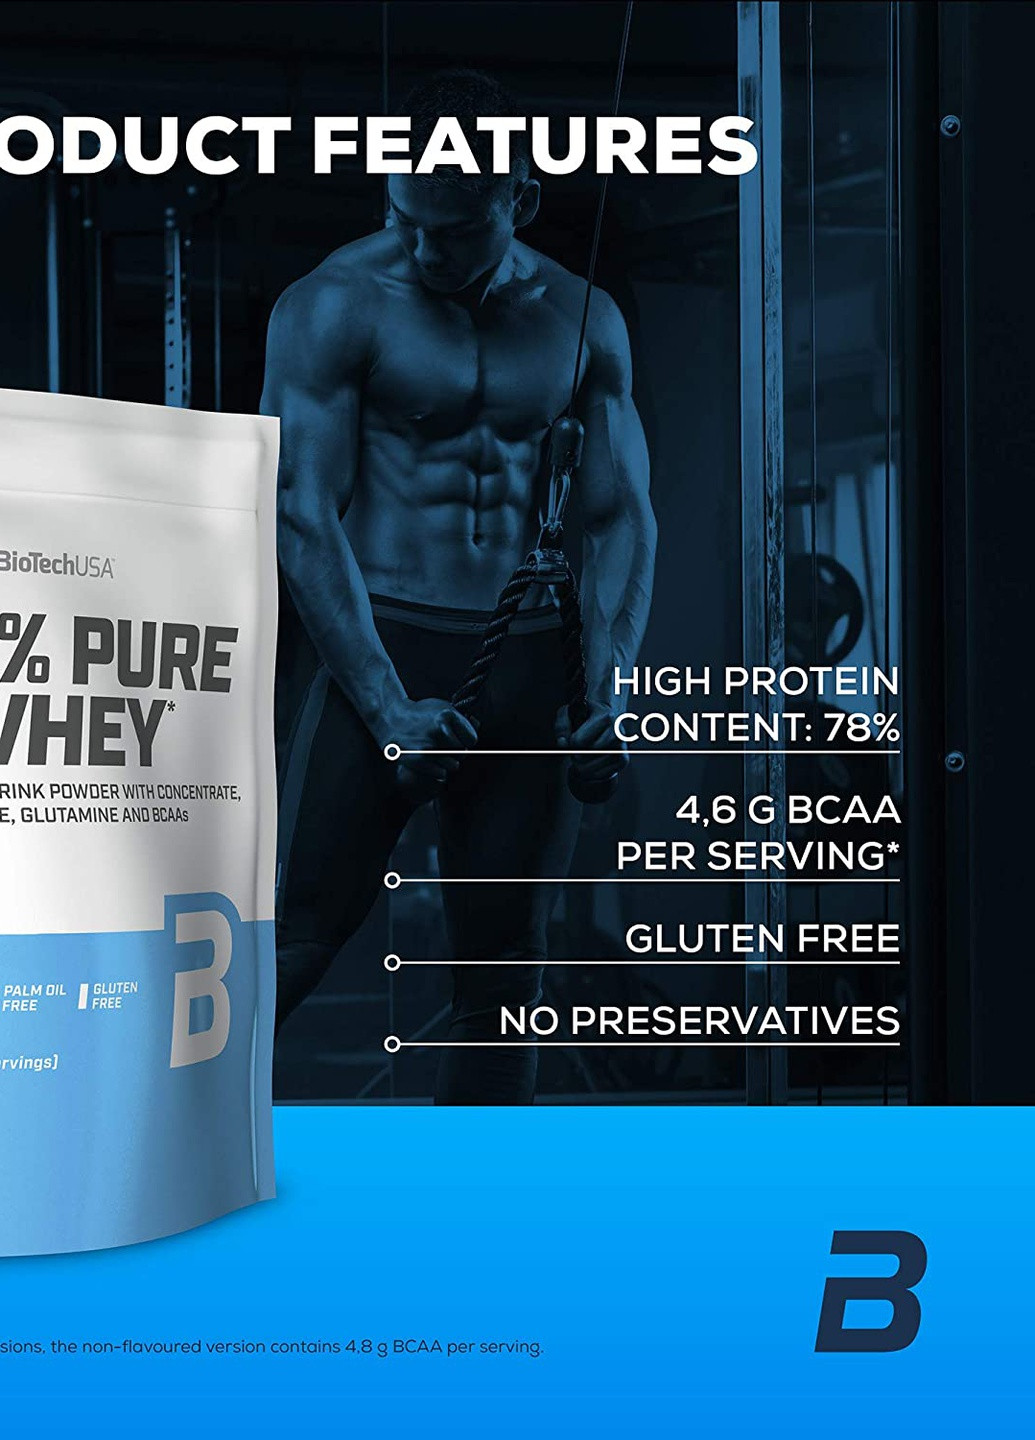 Протеїн 100% Pure Whey 454 g (Chocolate-peanut butter) Biotech (255622452)